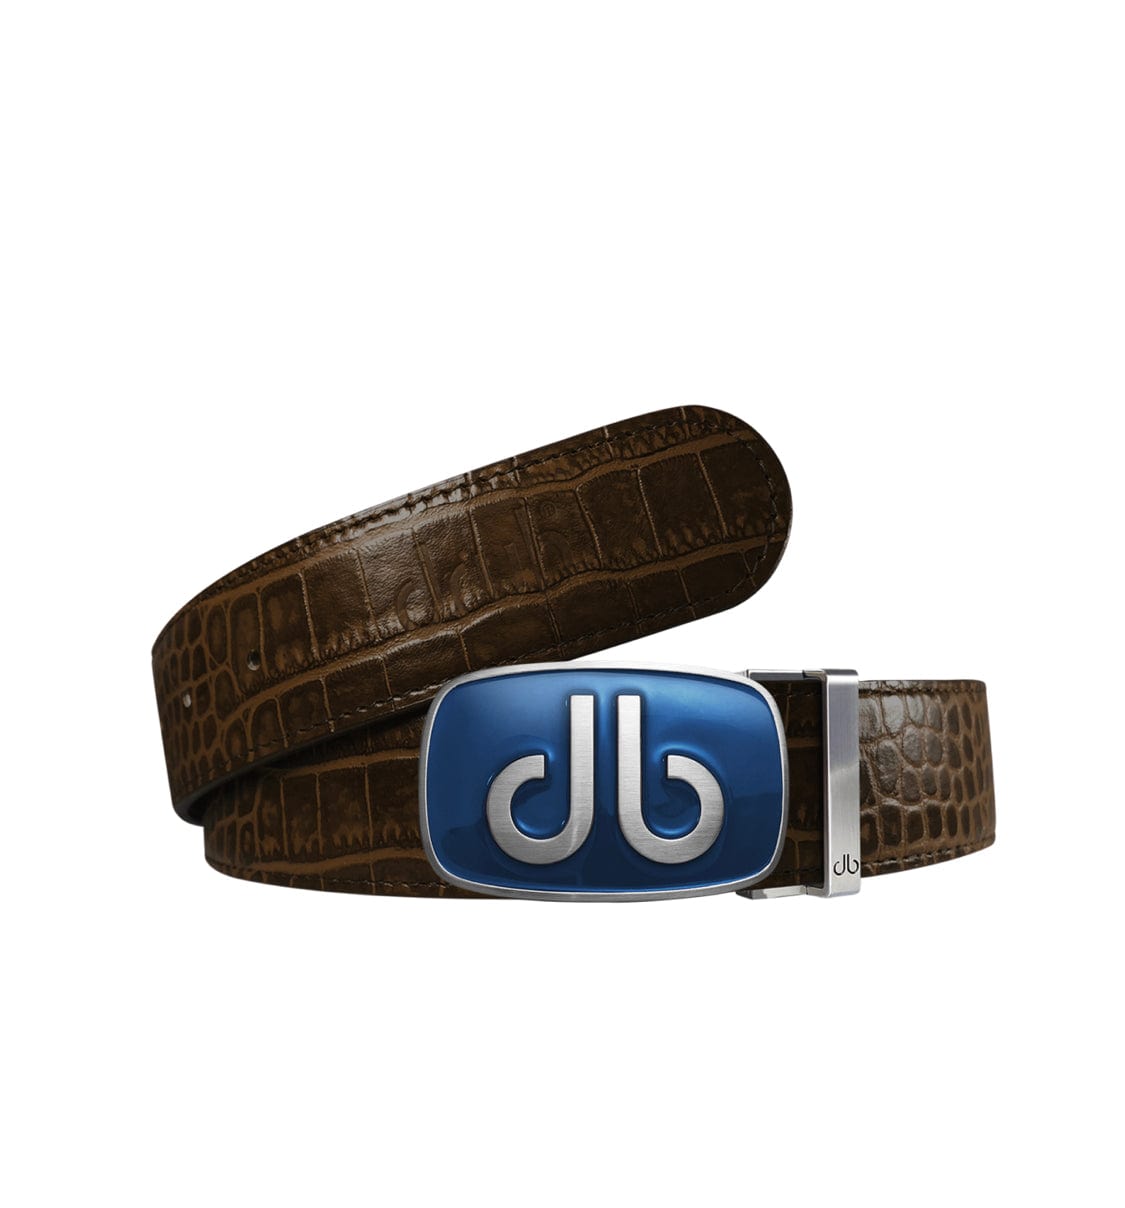 Dark Brown / Big & Gaint Crocodile Leather Belts Druh Belts USA